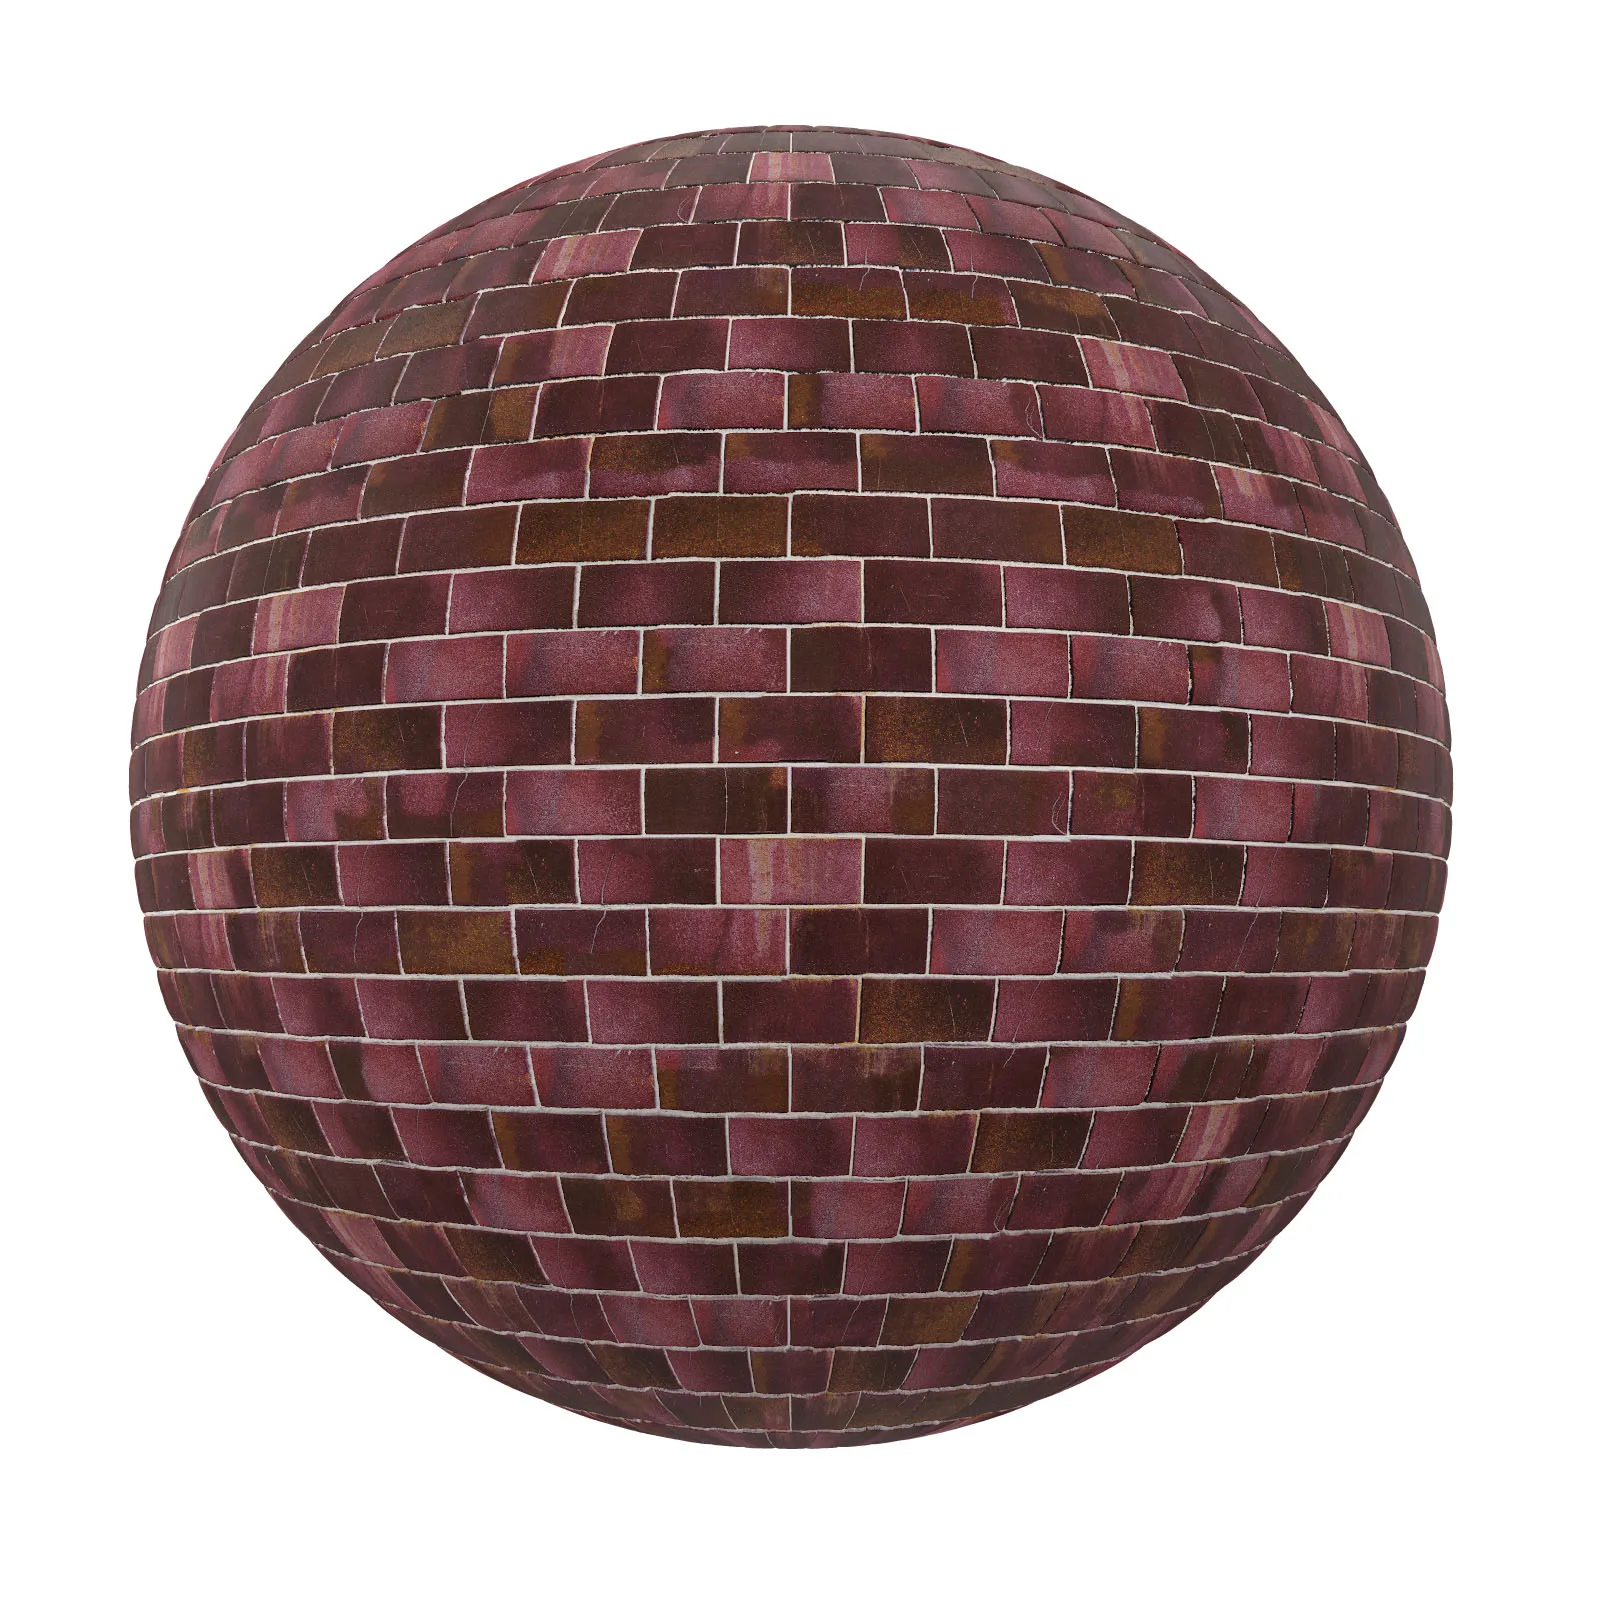 PBR CGAXIS TEXTURES – BRICK – Purple Brick Wall